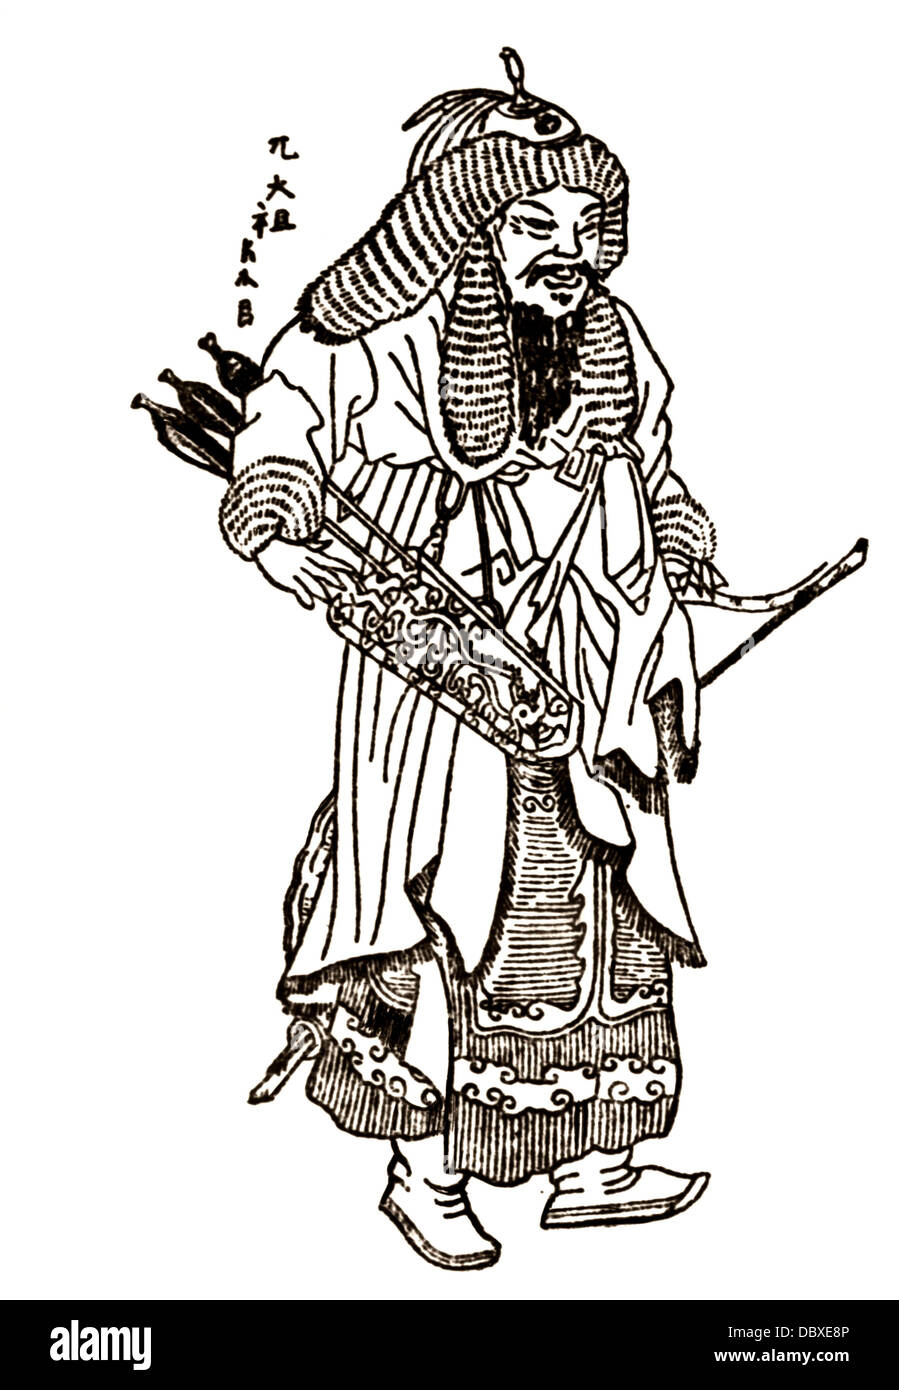 1200s ritratto di Gengis Khan 1167-1227 conquistatore mongolo LEADER GUERRIERO Foto Stock